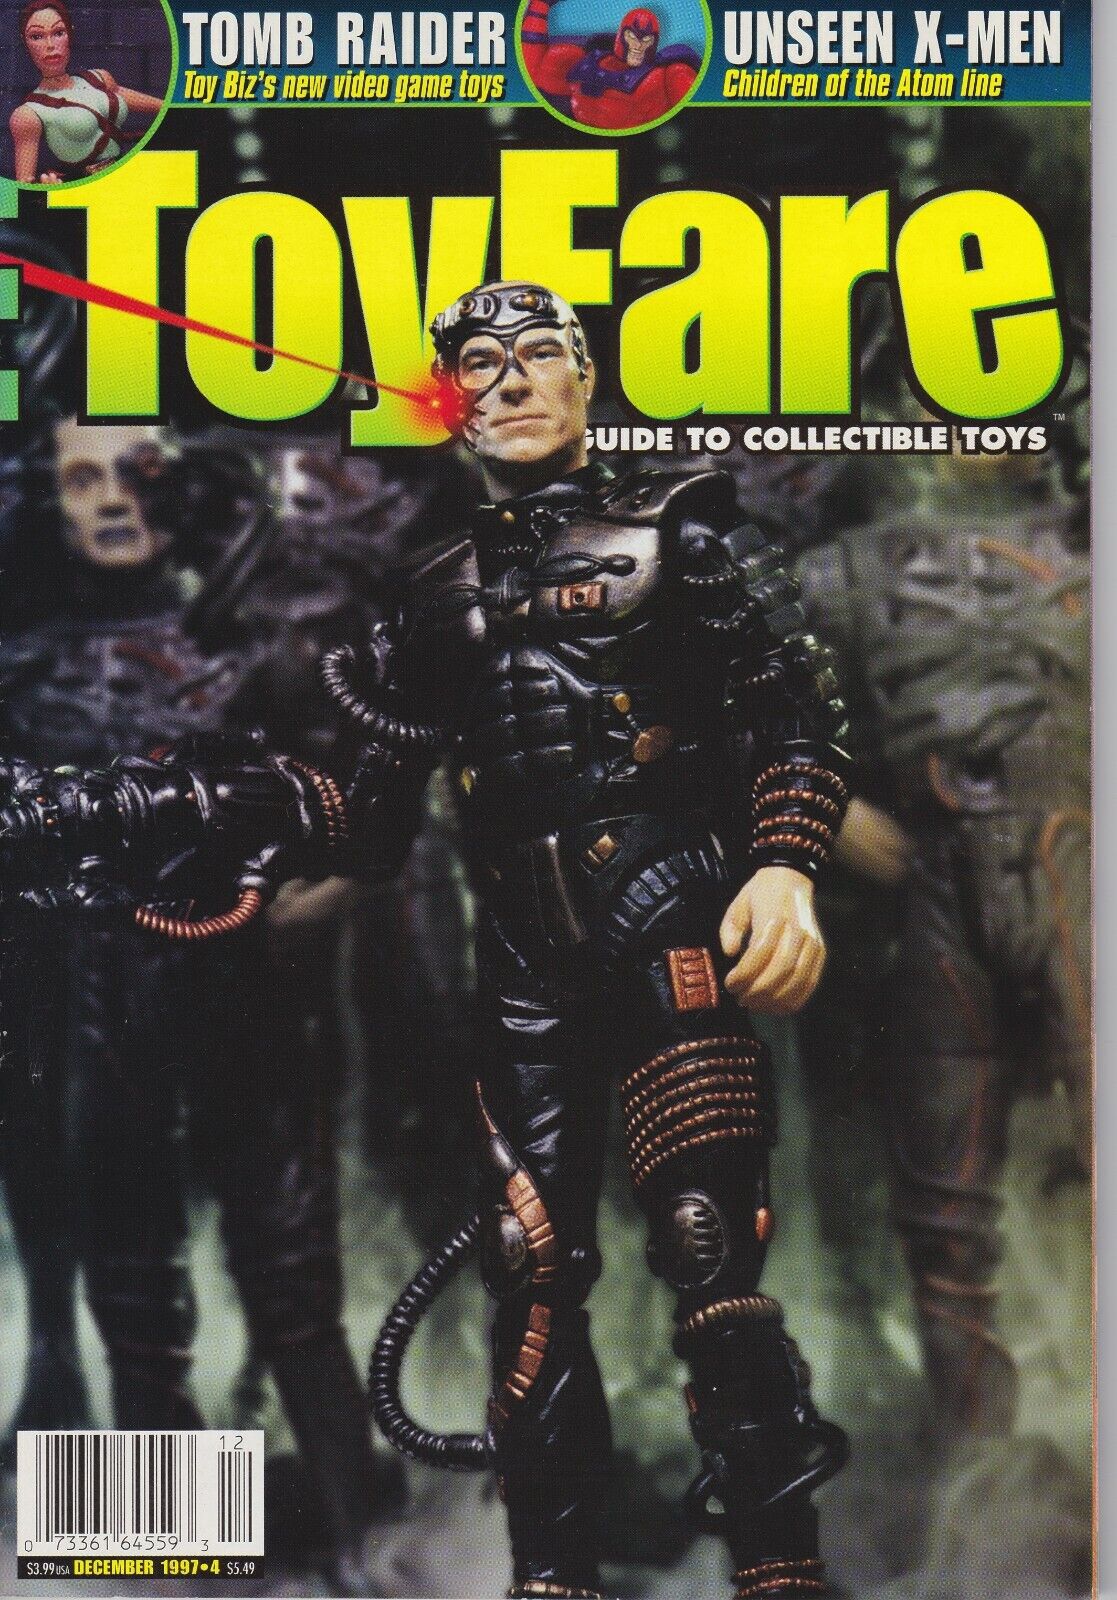 TOYFARE Magazine #4 December 1997 Locutus of Borg, Star Trek, Tomb Raider, X-Men